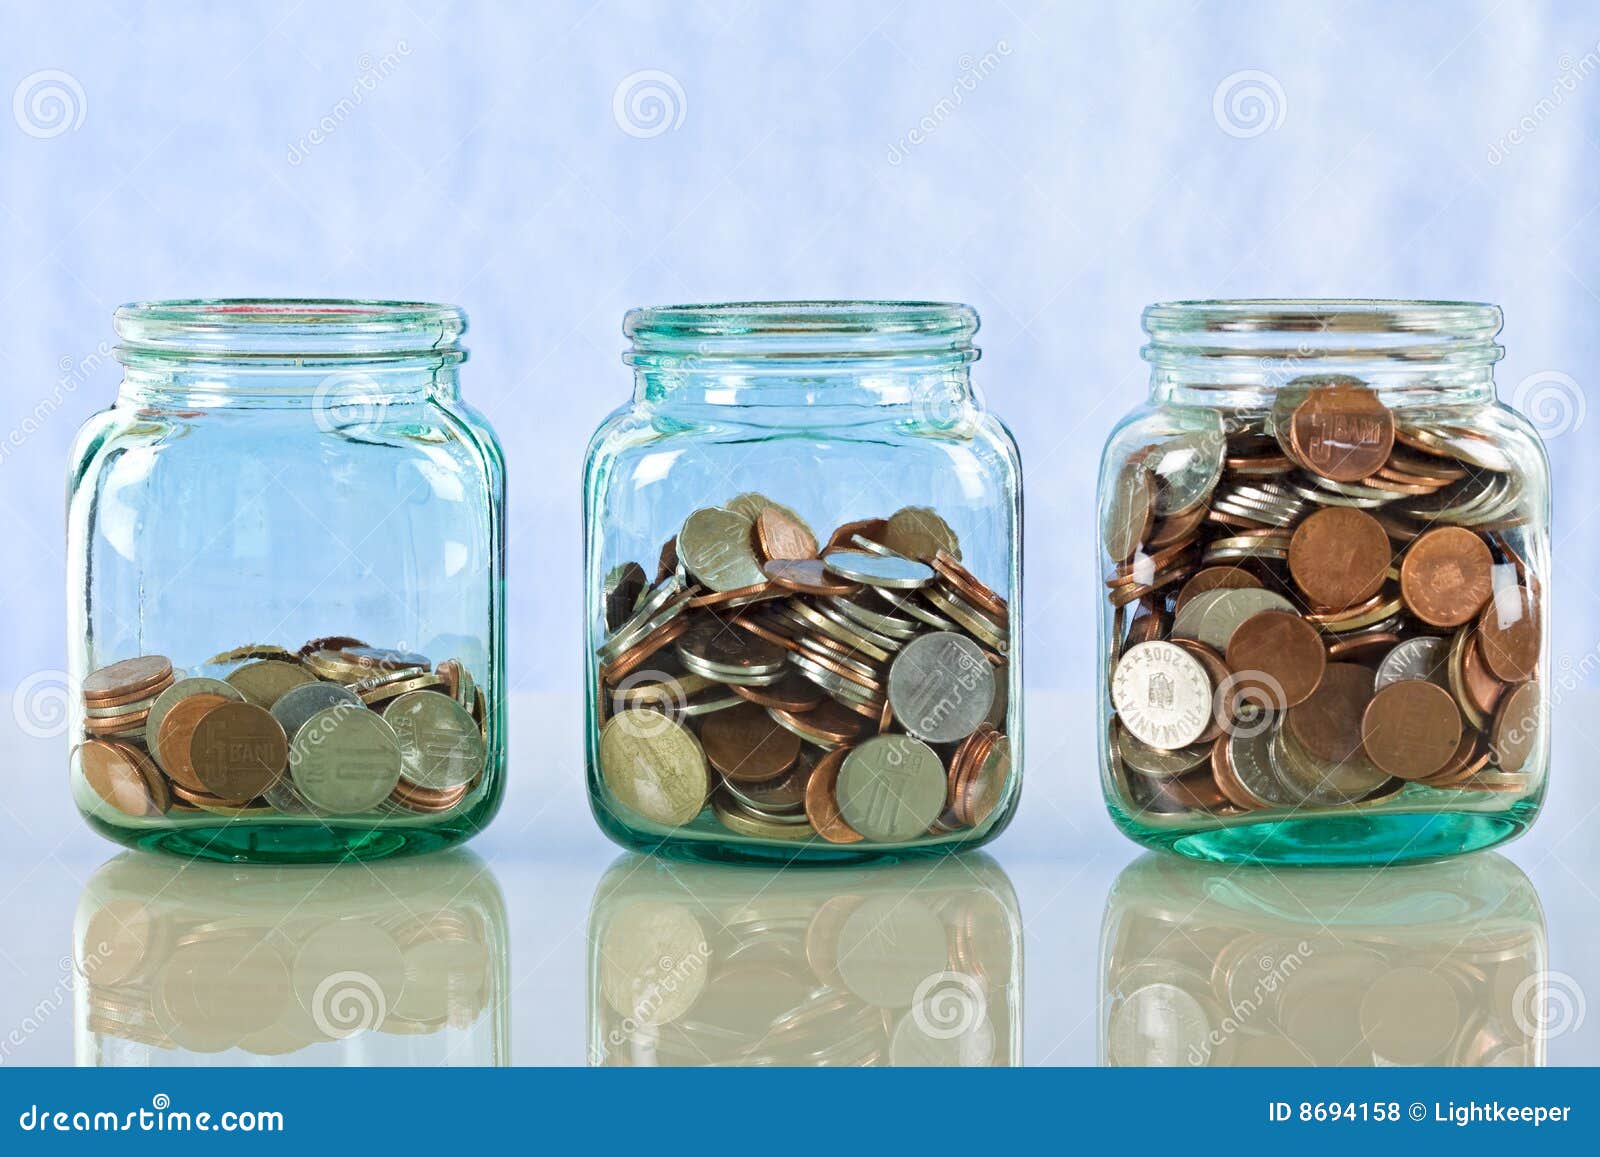 saving money in old jars